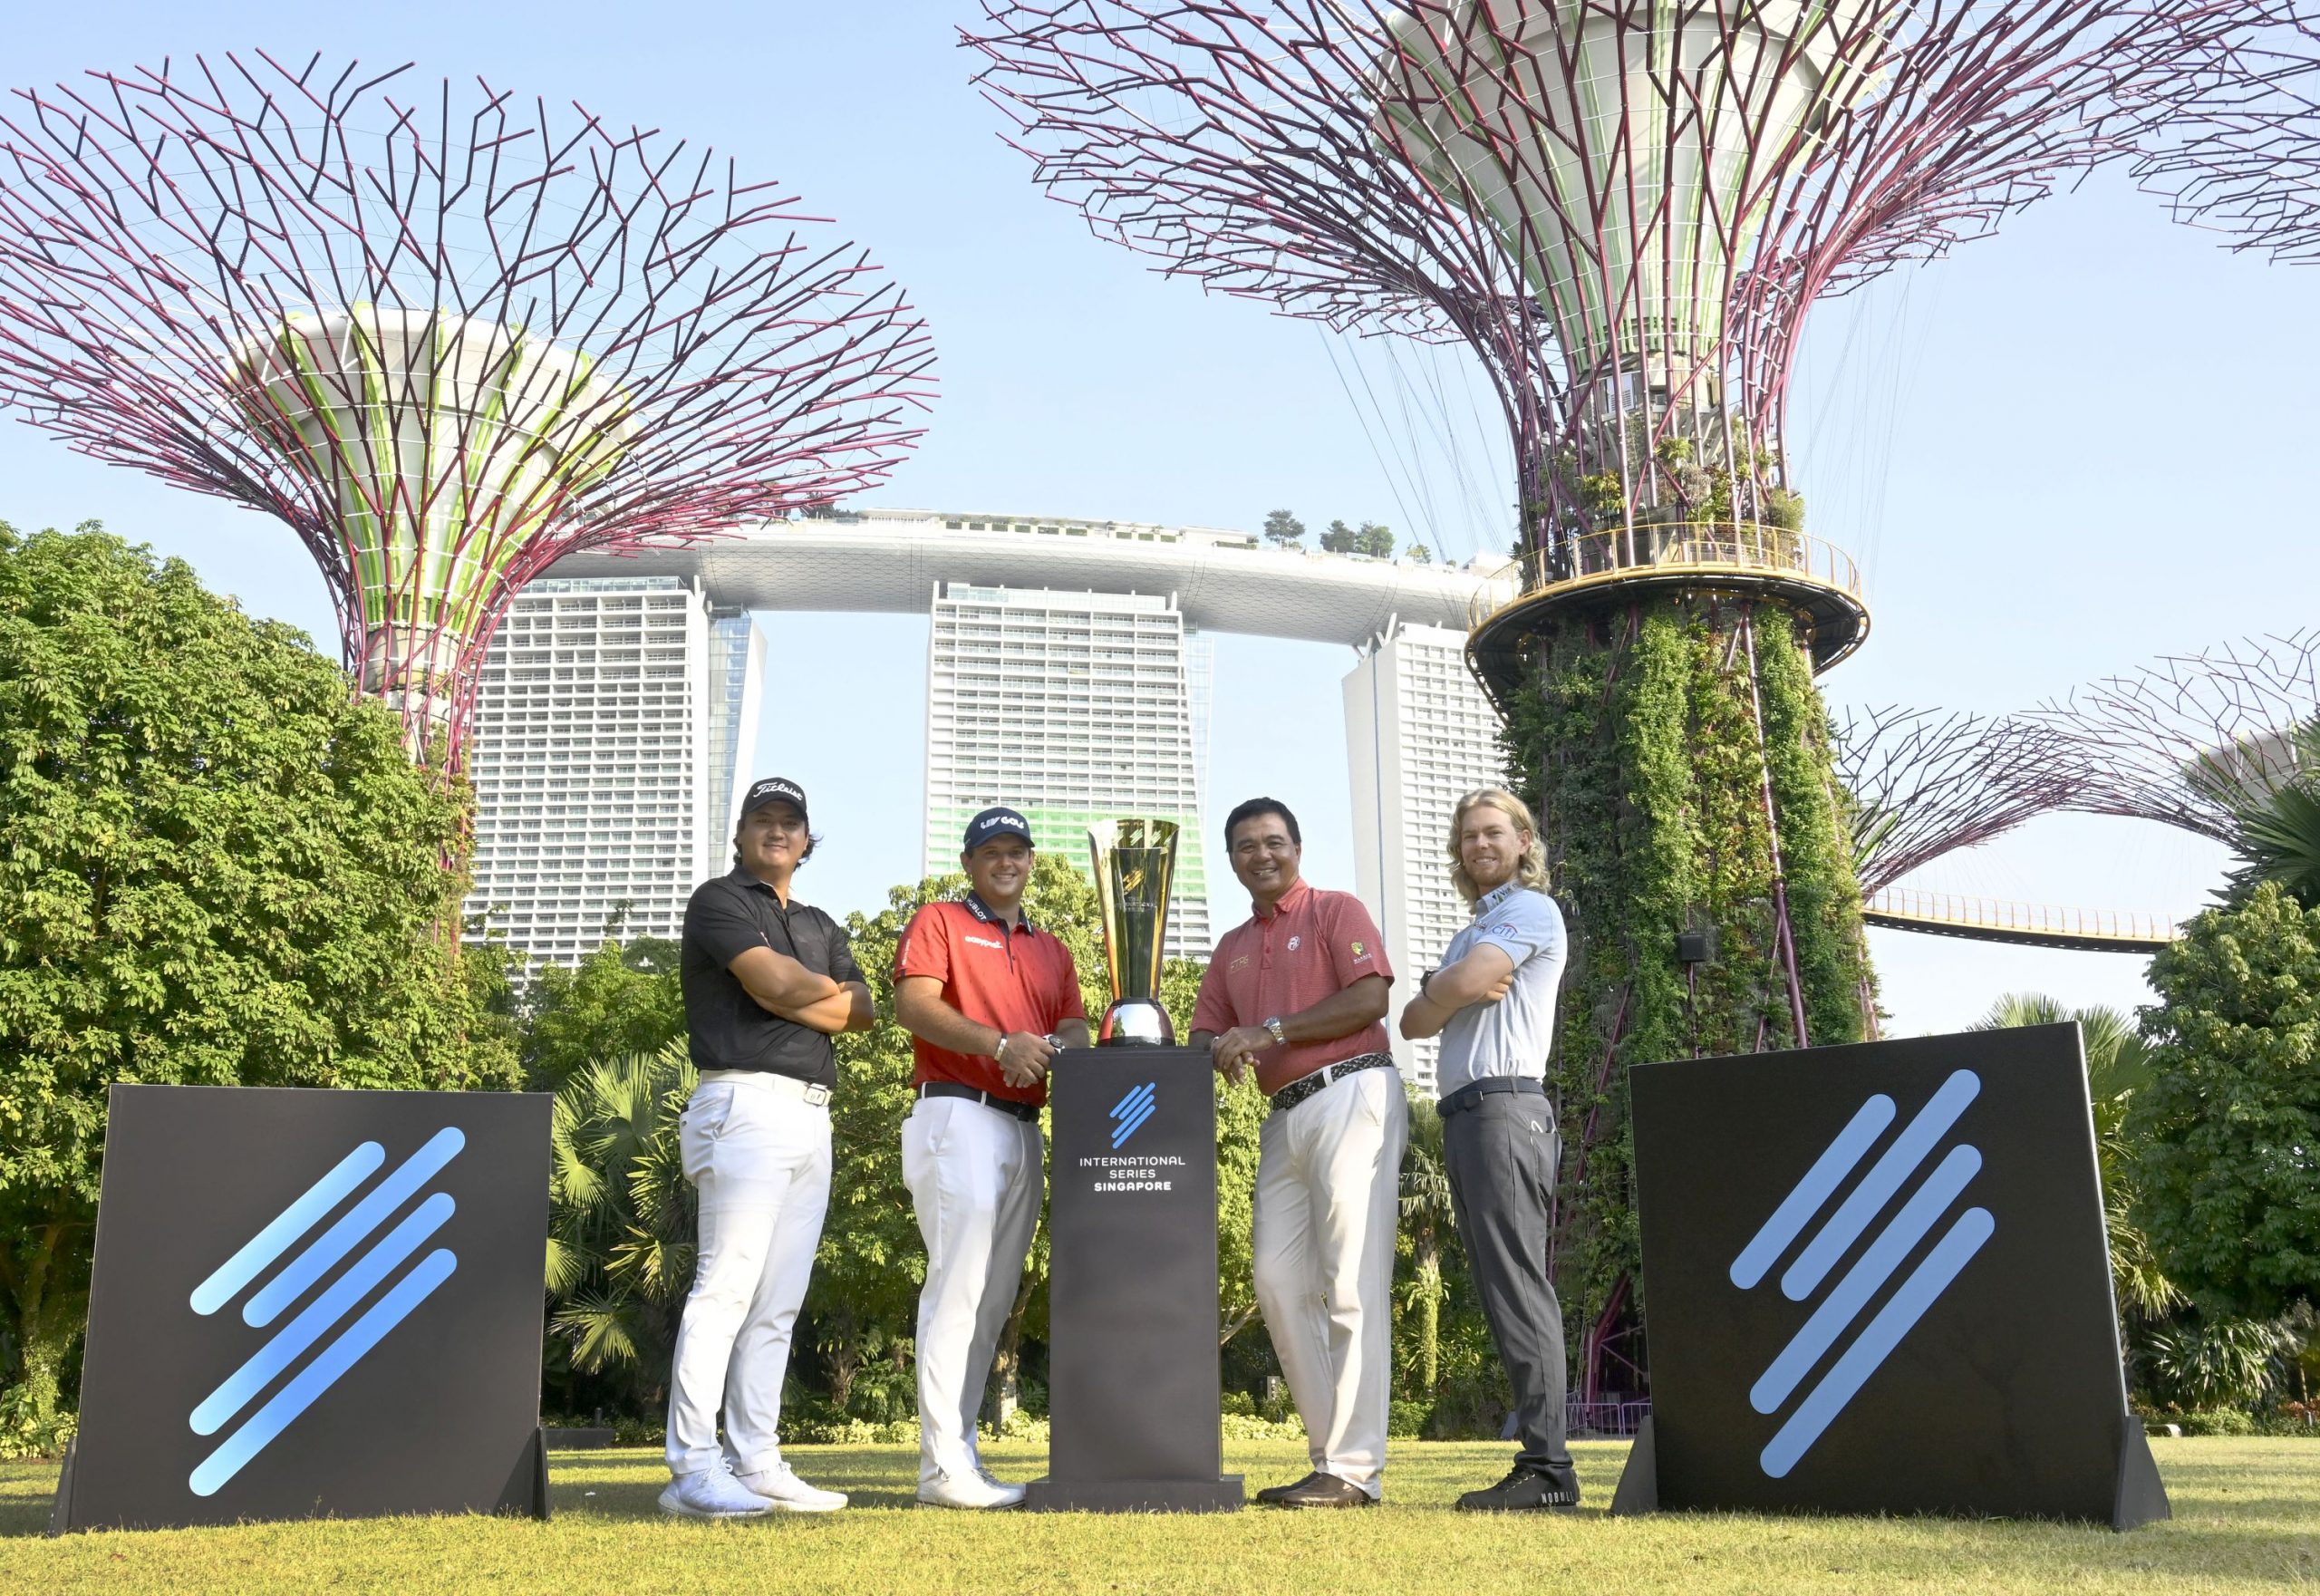 asian tour golf singapore